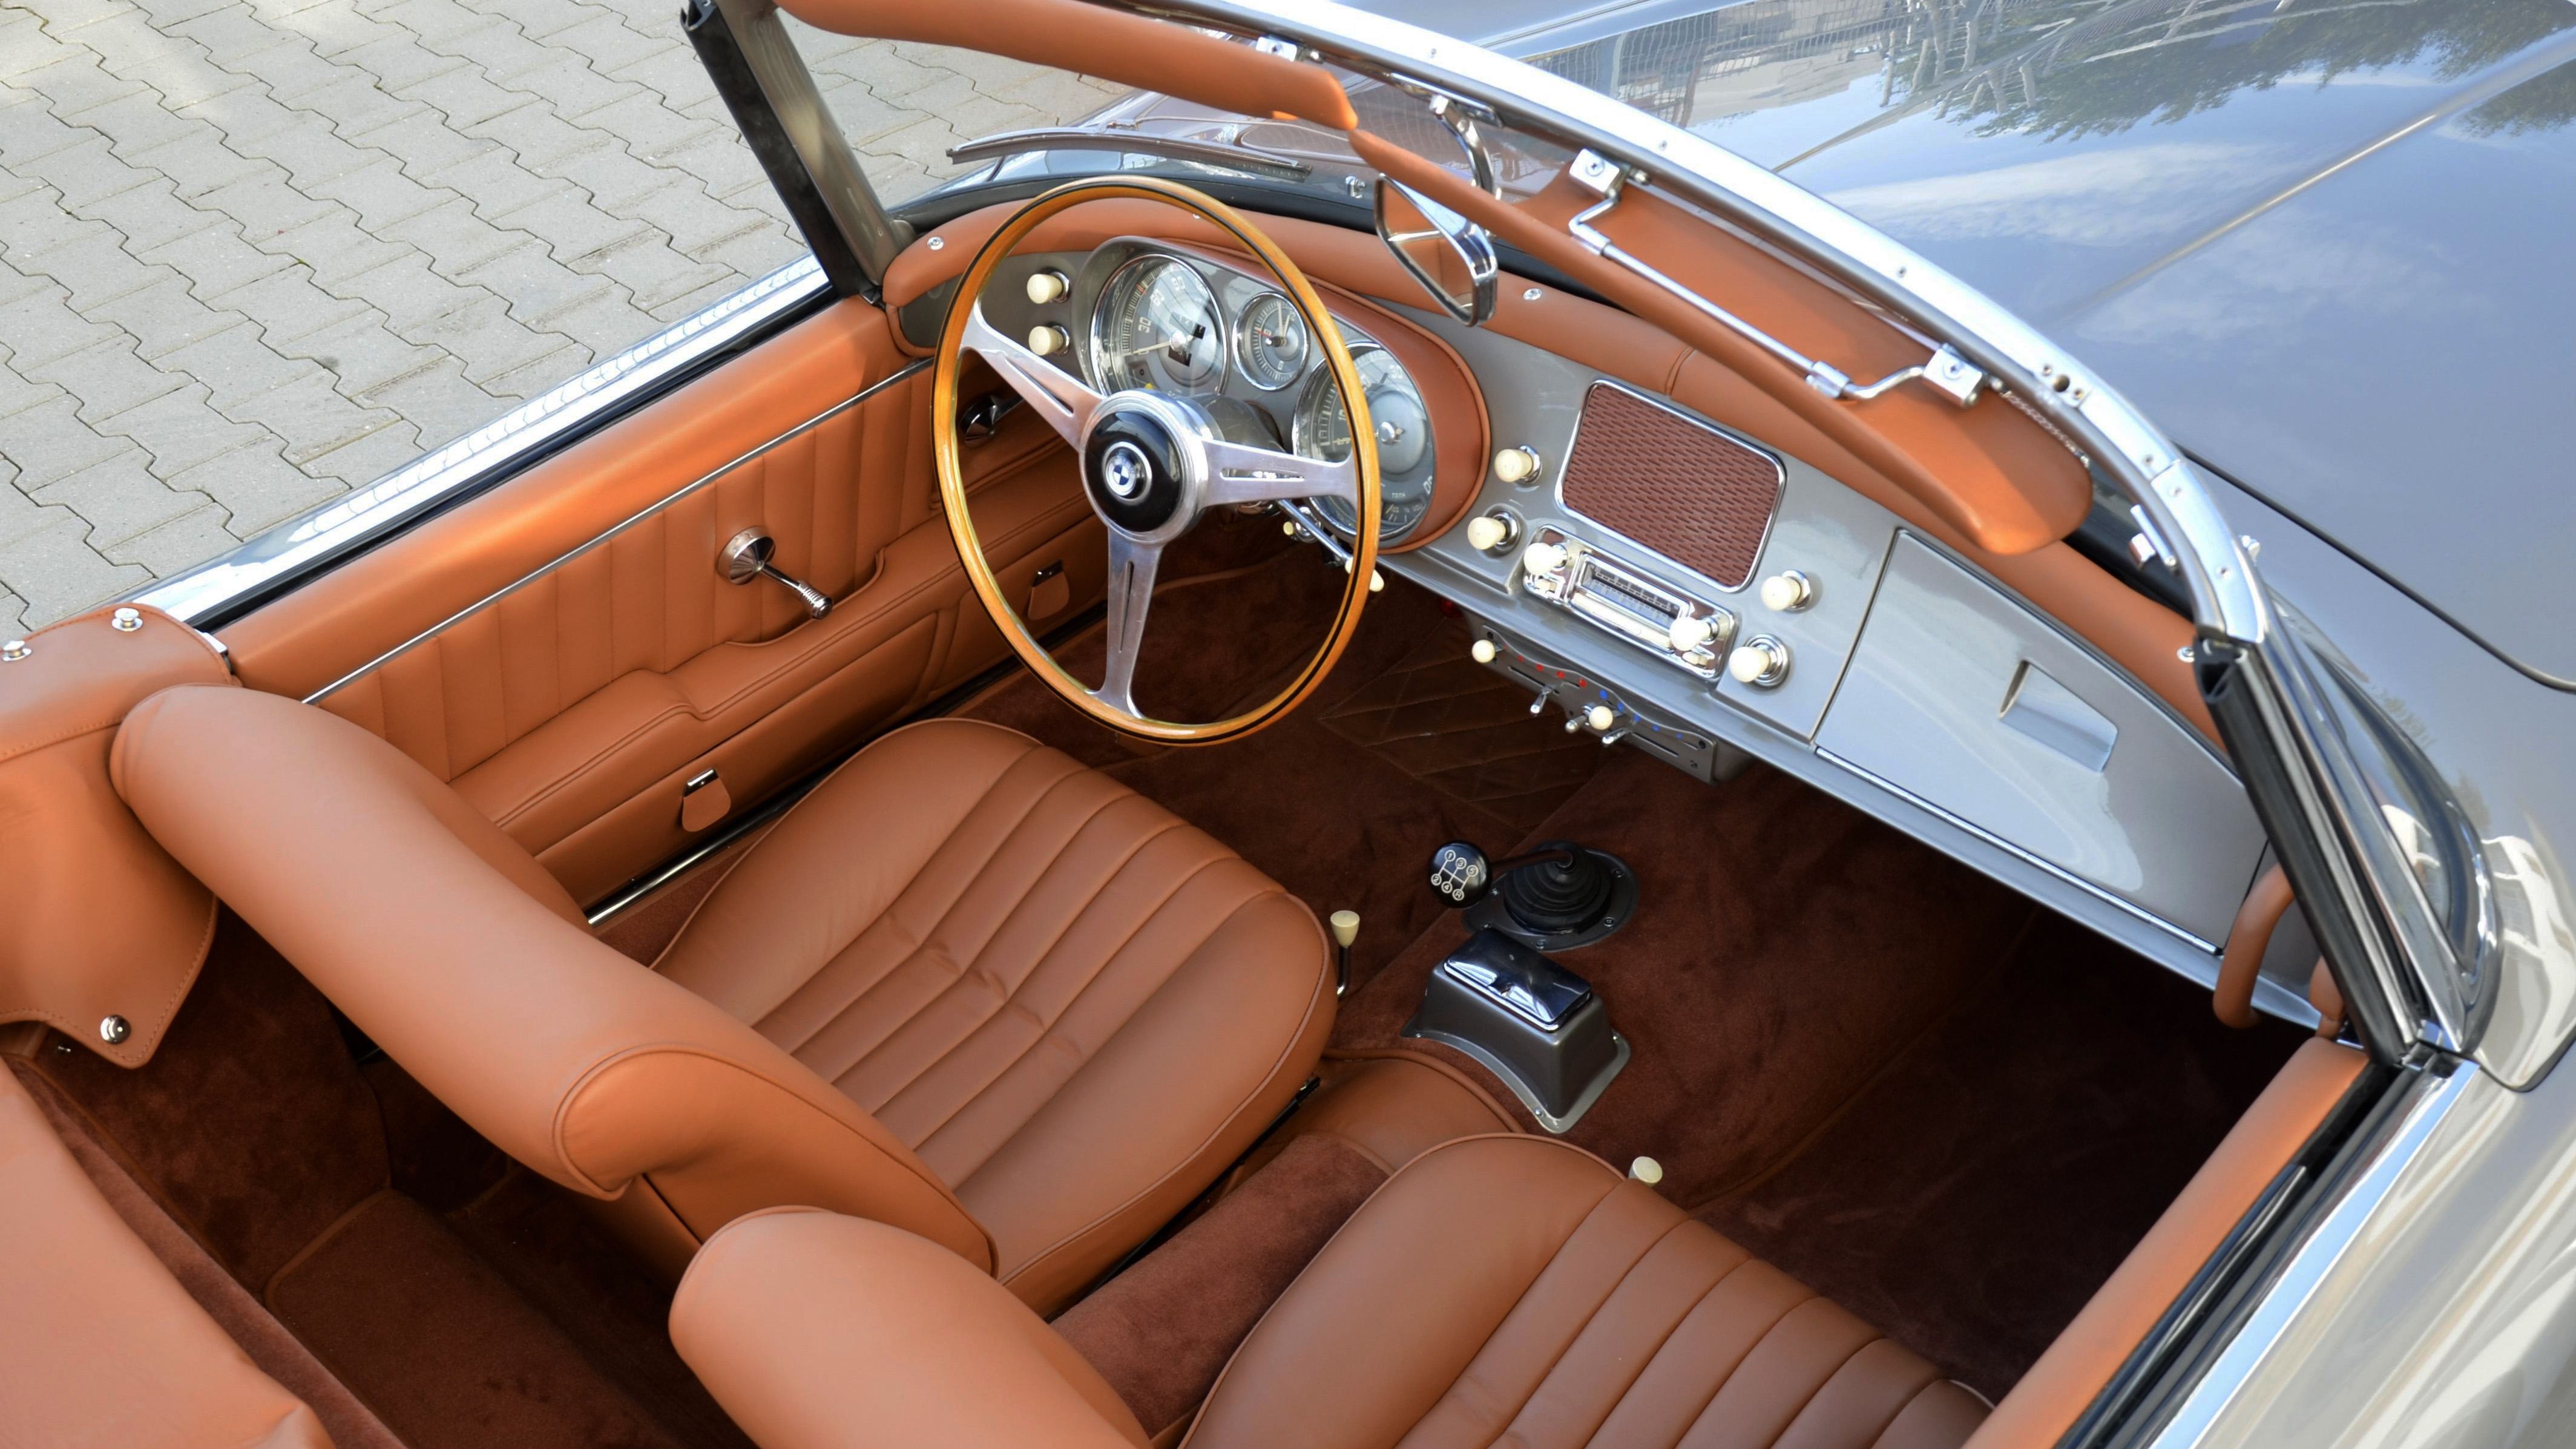 1956 BMW 507 Series 1